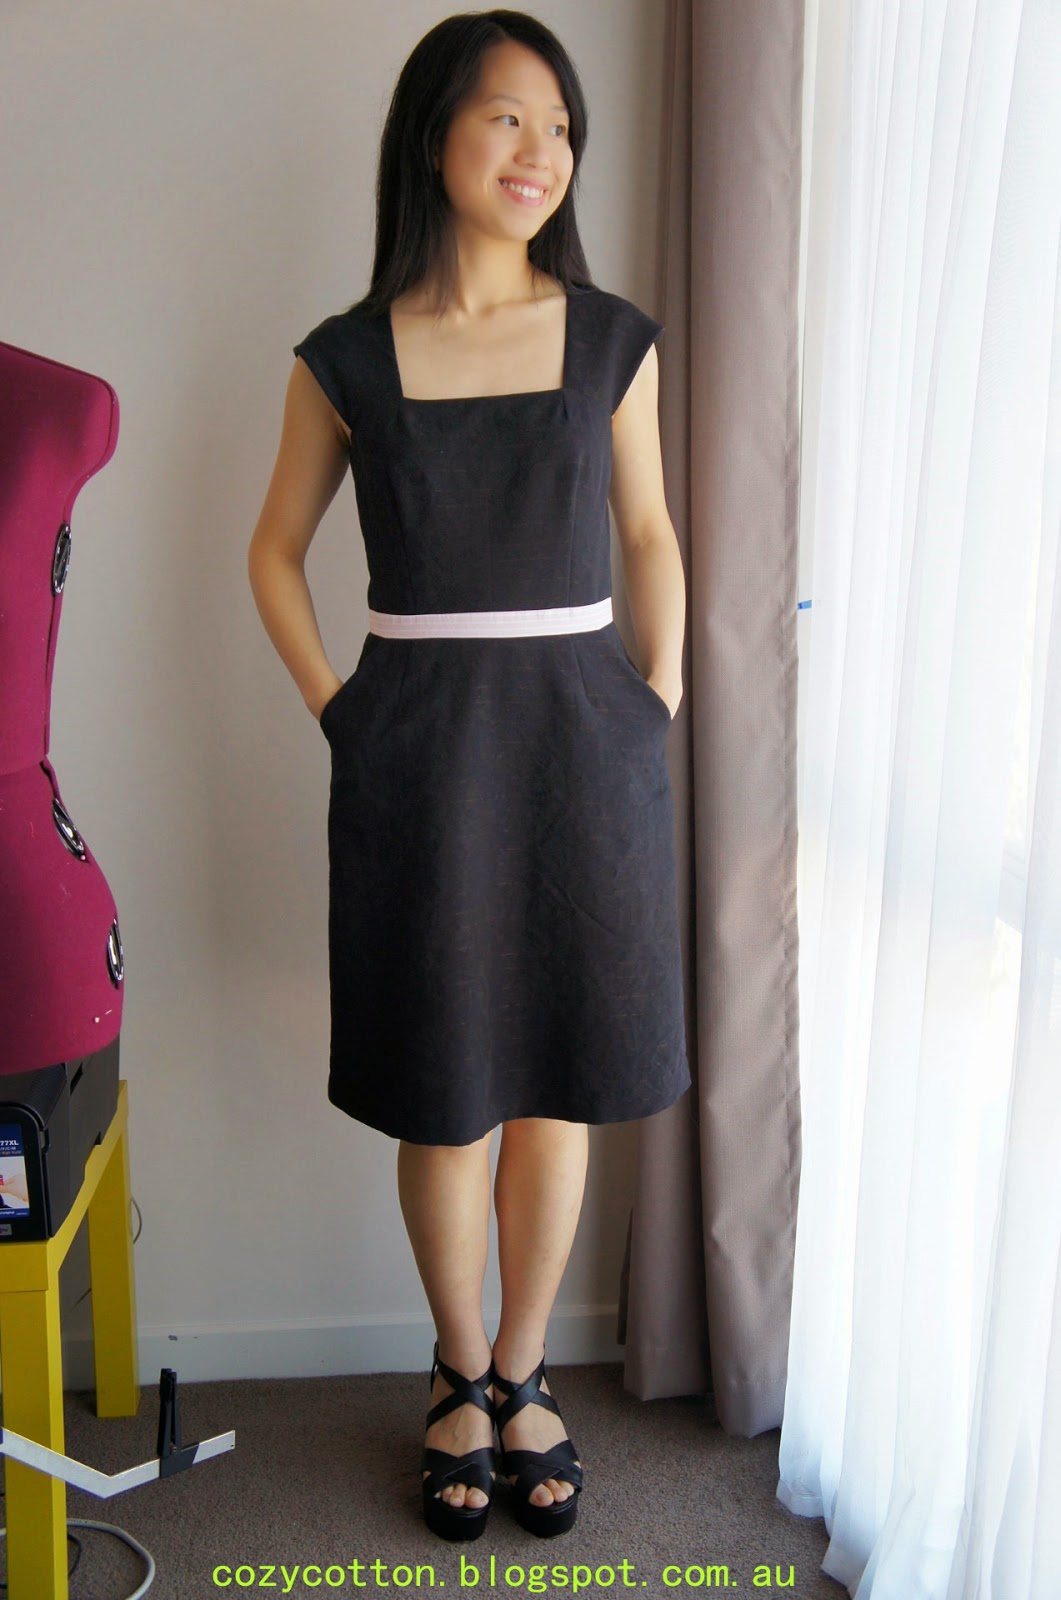 CozyCotton: Celeste's Sewing Blog: My black Cambie Dress